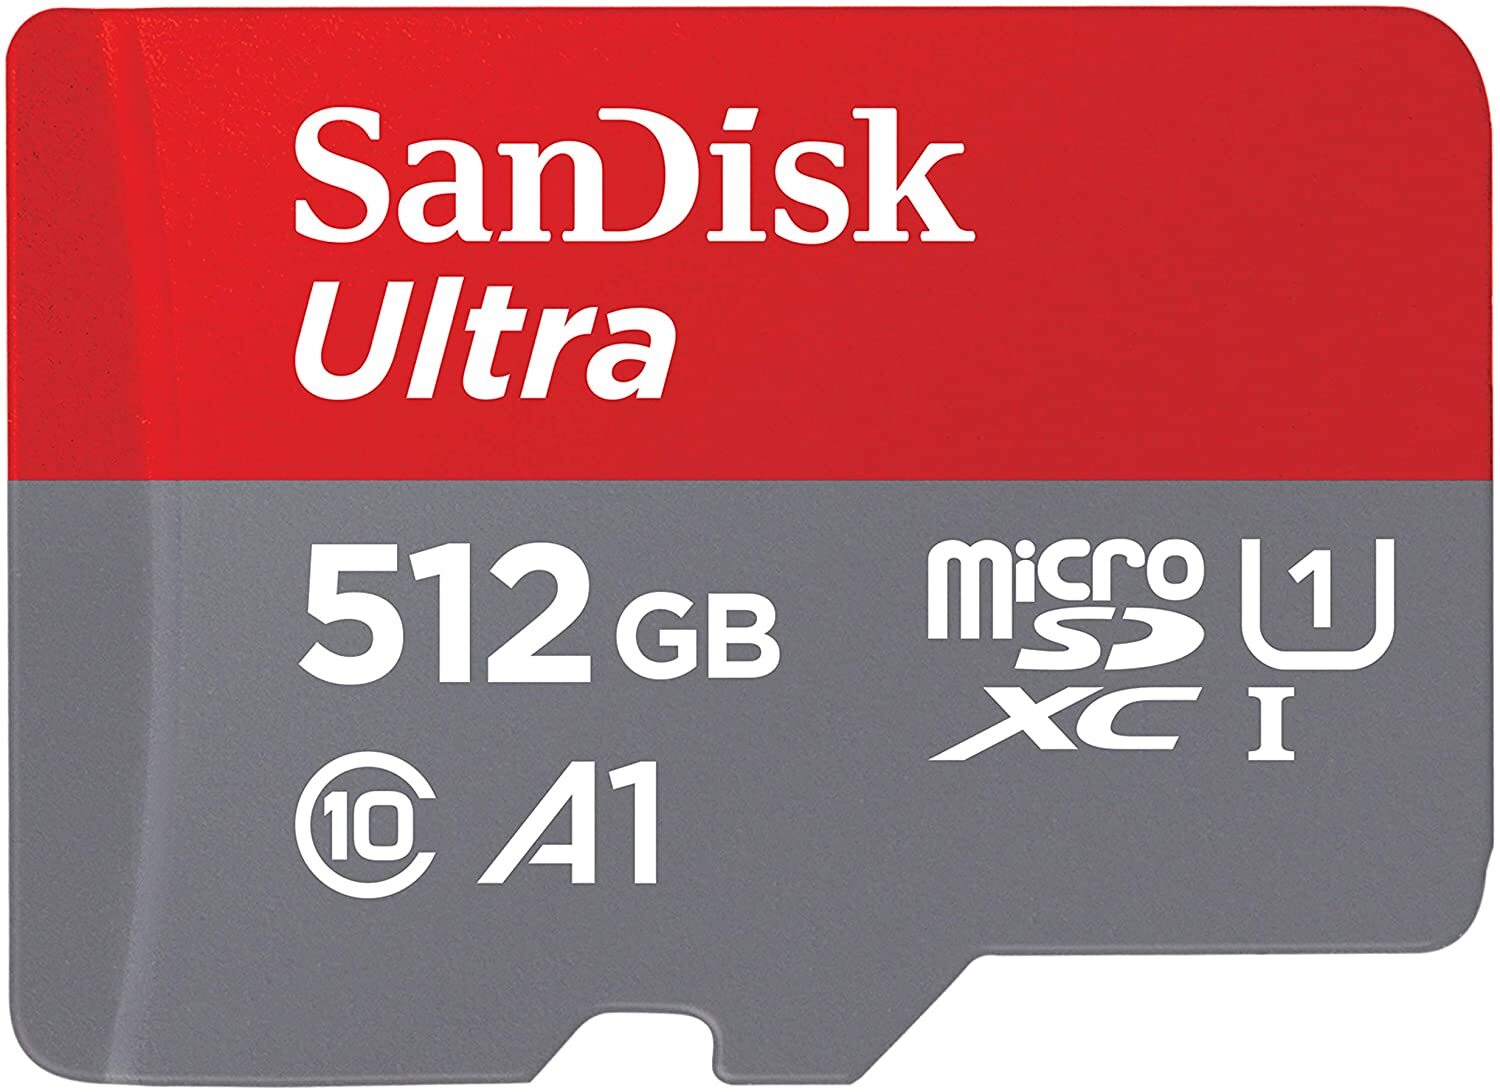 SanDisk Ultra 512GB Micro SD Card